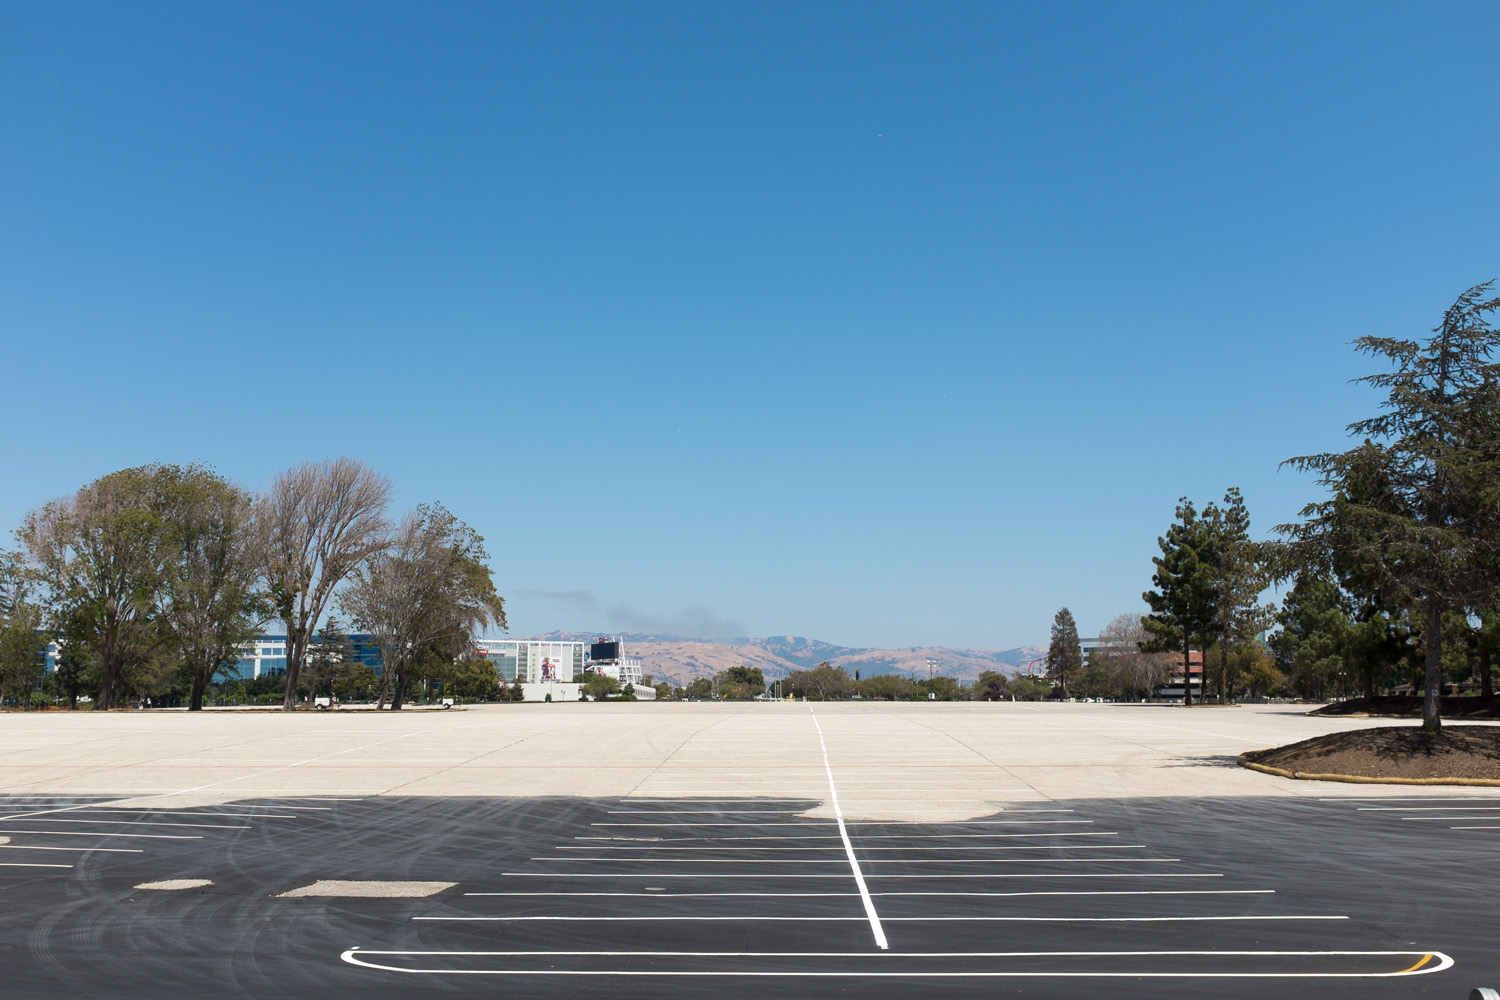 49ers Parking, Santa Clara